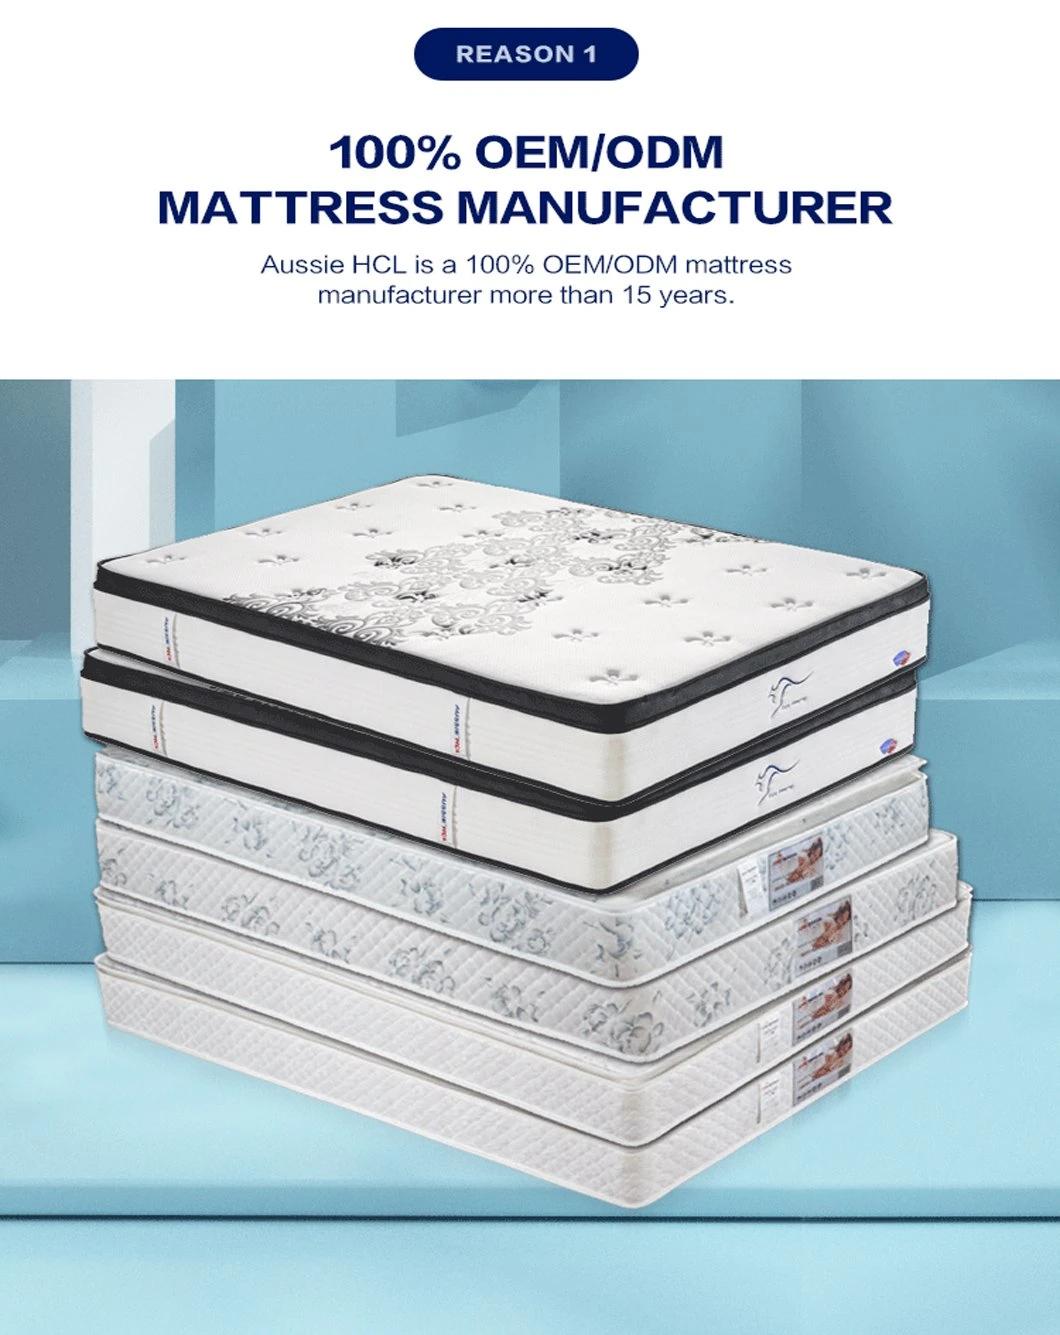 Luxury Sleep Well Single Shop Double Full King Mattresses Quality High Density Rebonded Foam Mattress Rolled in a Box